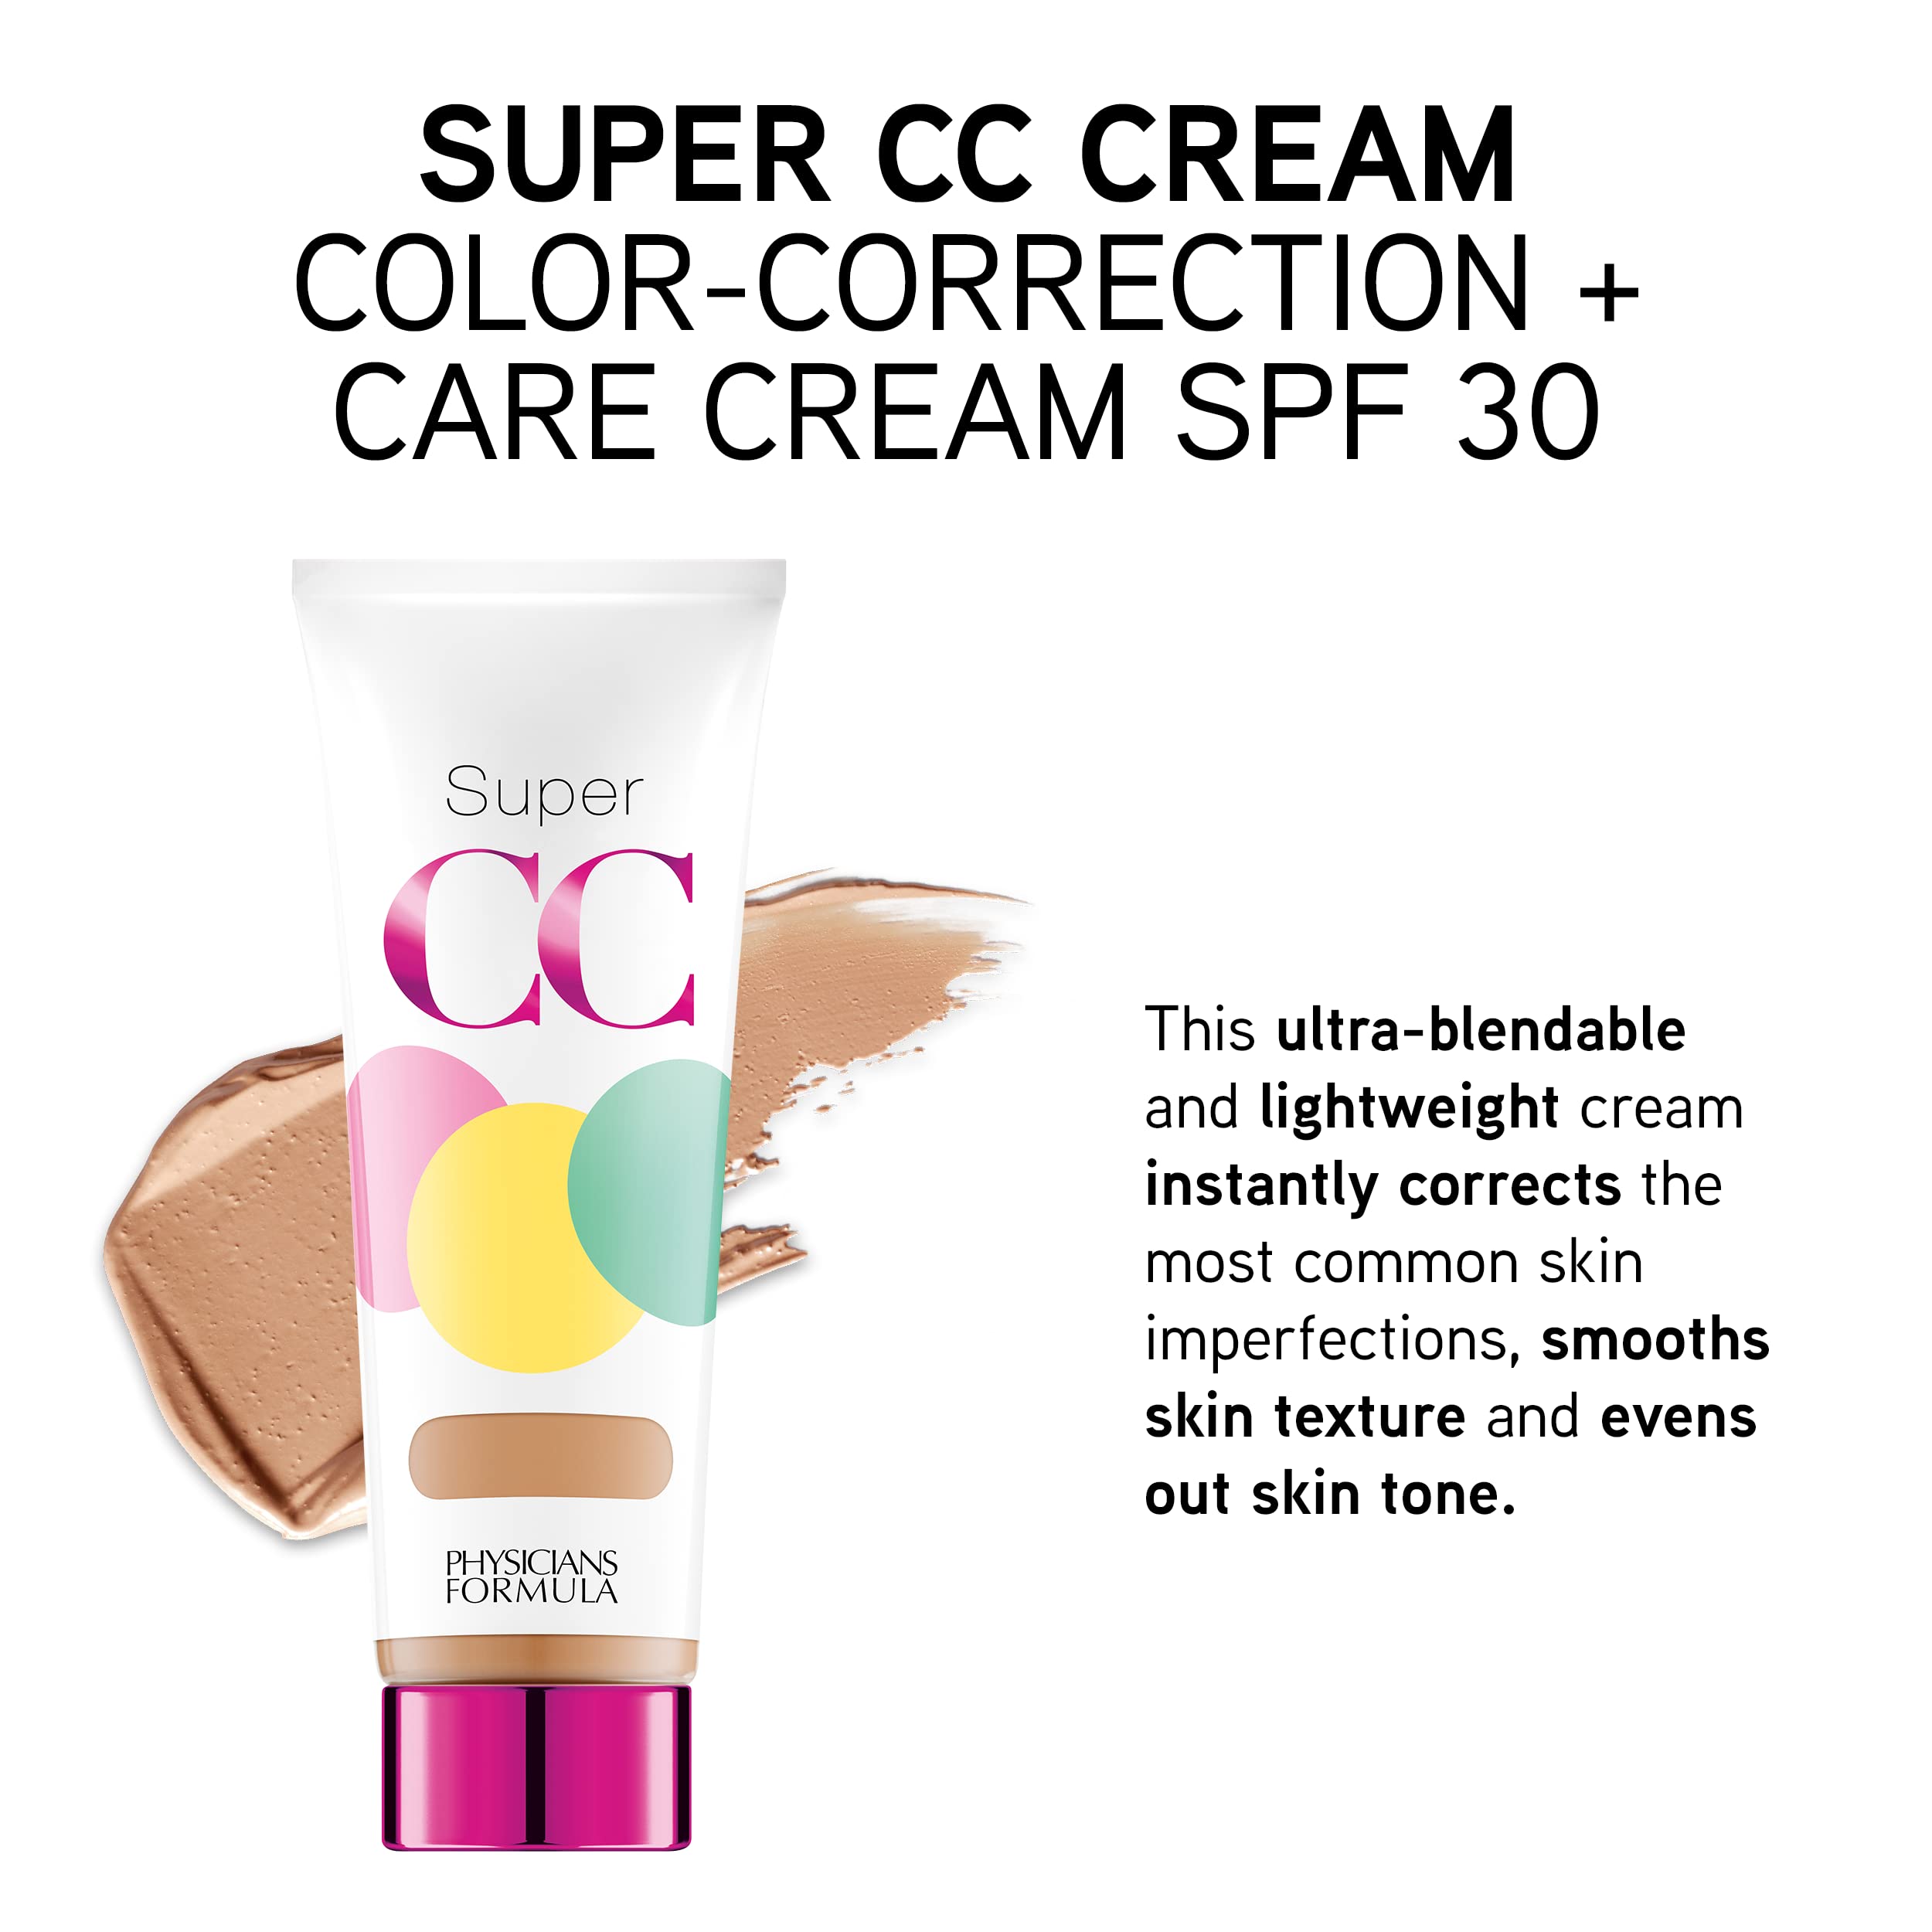 Physicians Formula Super CC+ Cream Color-Correction + Care Cream Full Coverage Foundation, SPF 30, Anti Aging Hydrating Serum, For Uneven Skin Tone, Dermatologist Approved, Light